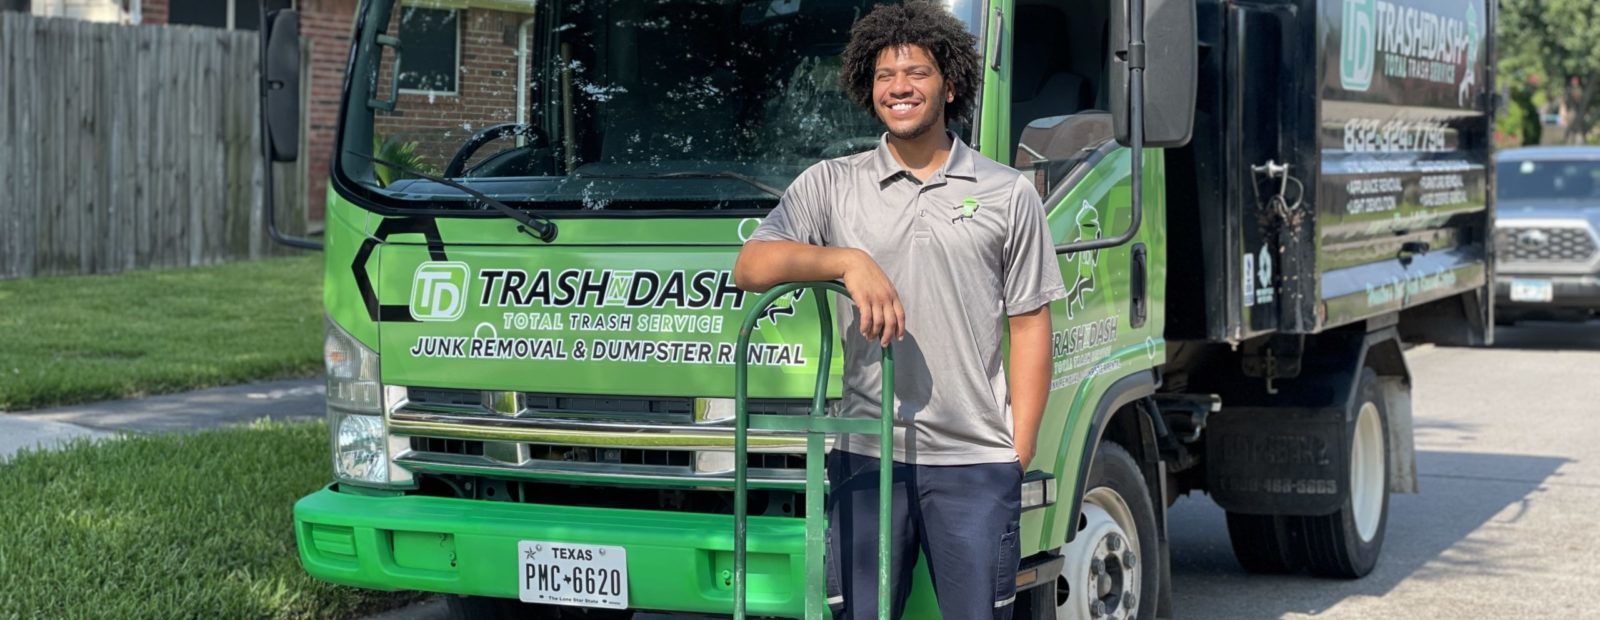 trash n dash employee ready to remove construction debris